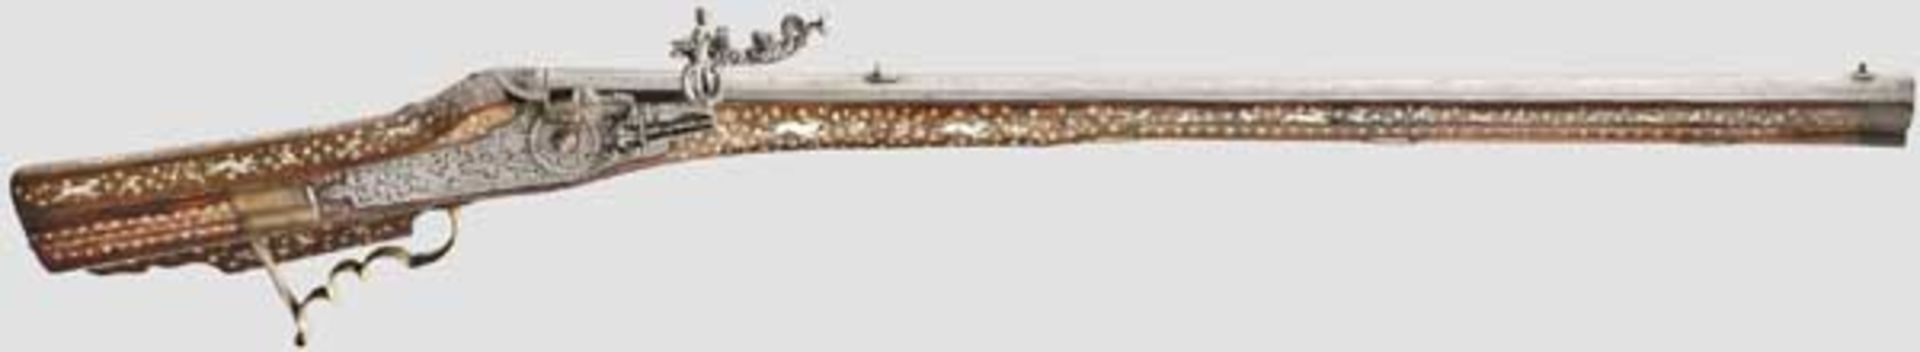 A German wheellock rifle, circa 1680, with bone inlays from historicism period   Octagonal barrel,